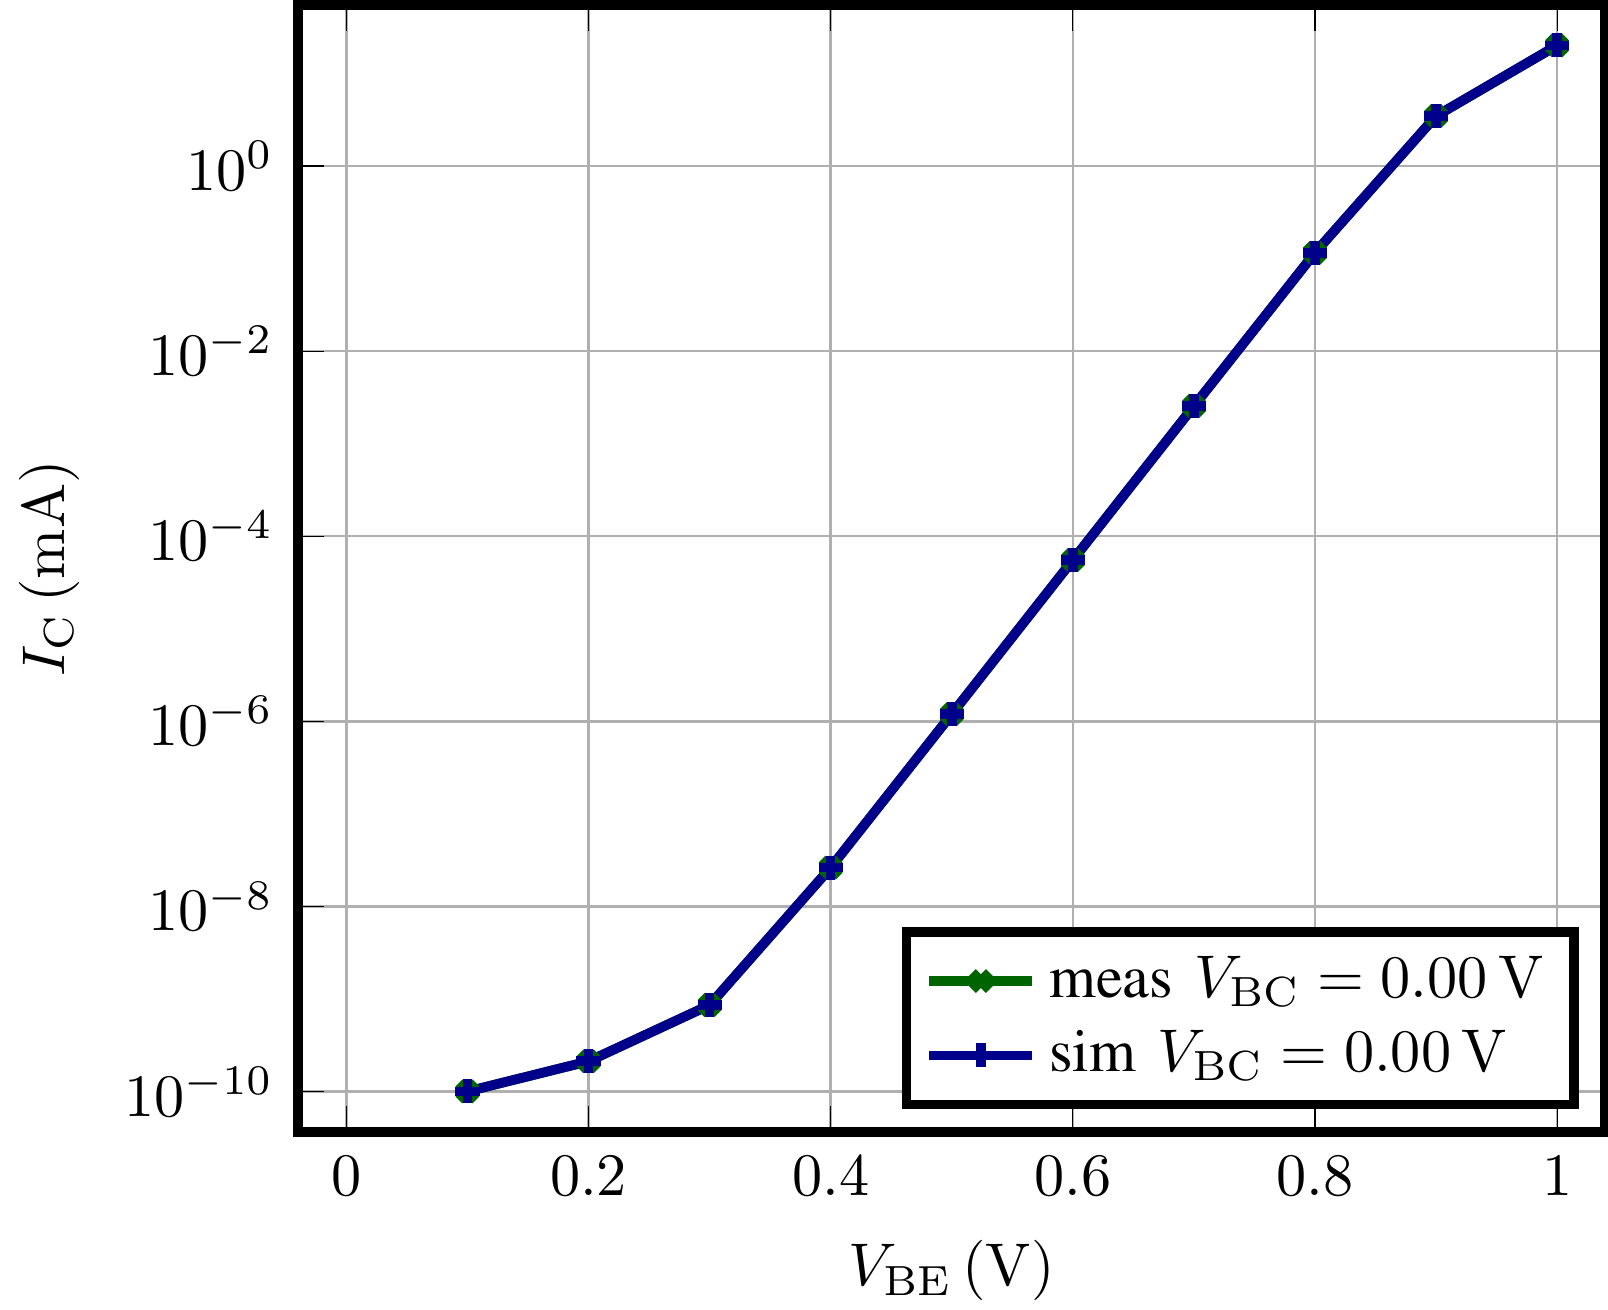 Collector current versus base-emitter voltage for measurement and simulation.